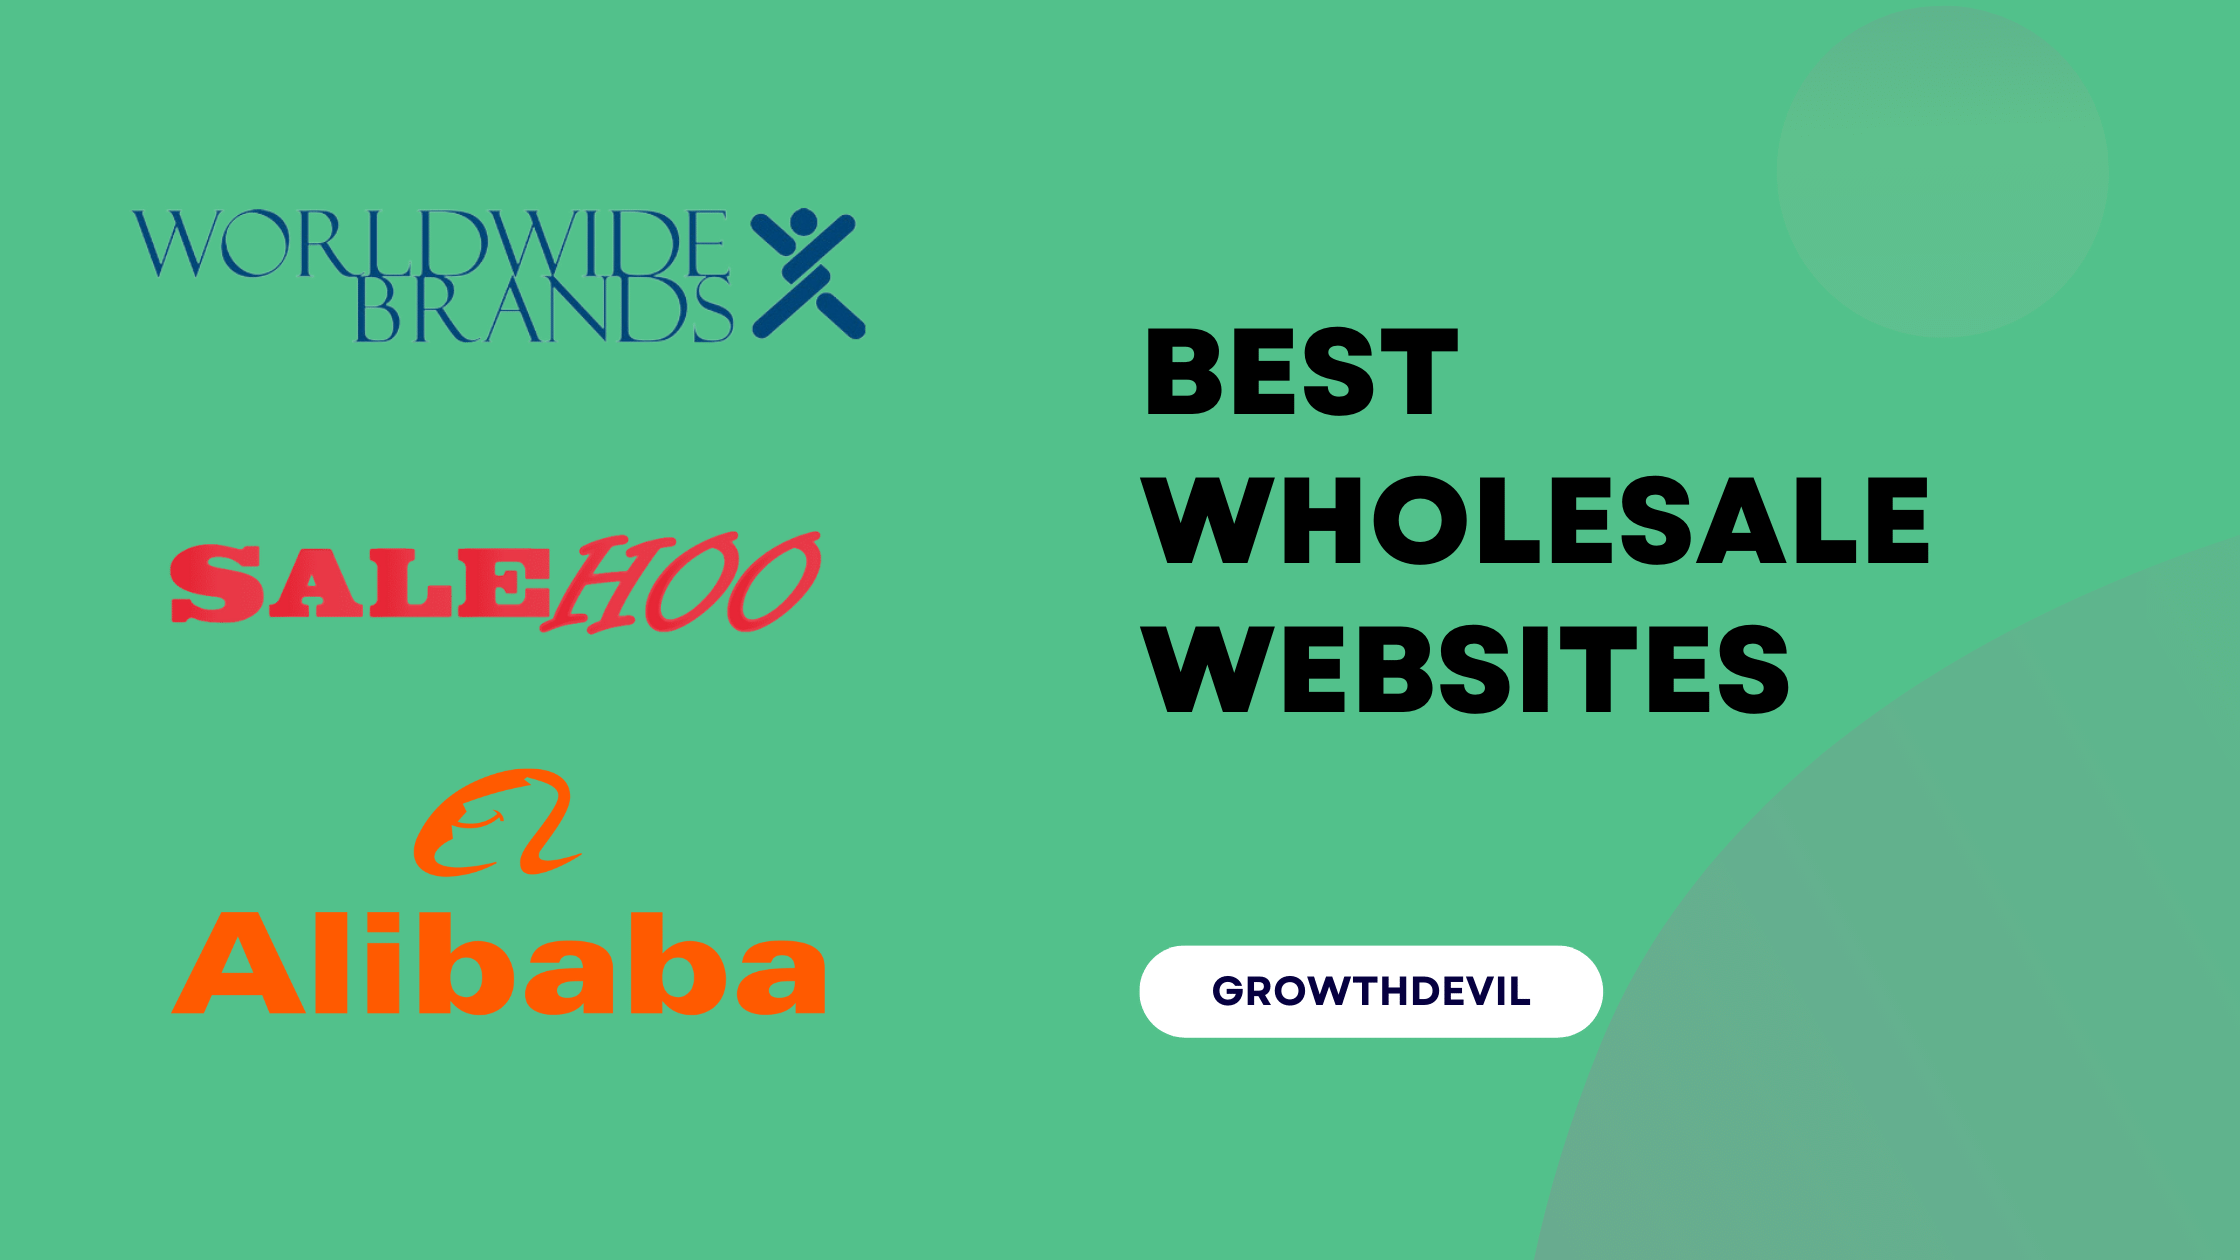 Best Wholesale Websites - Growthdevil